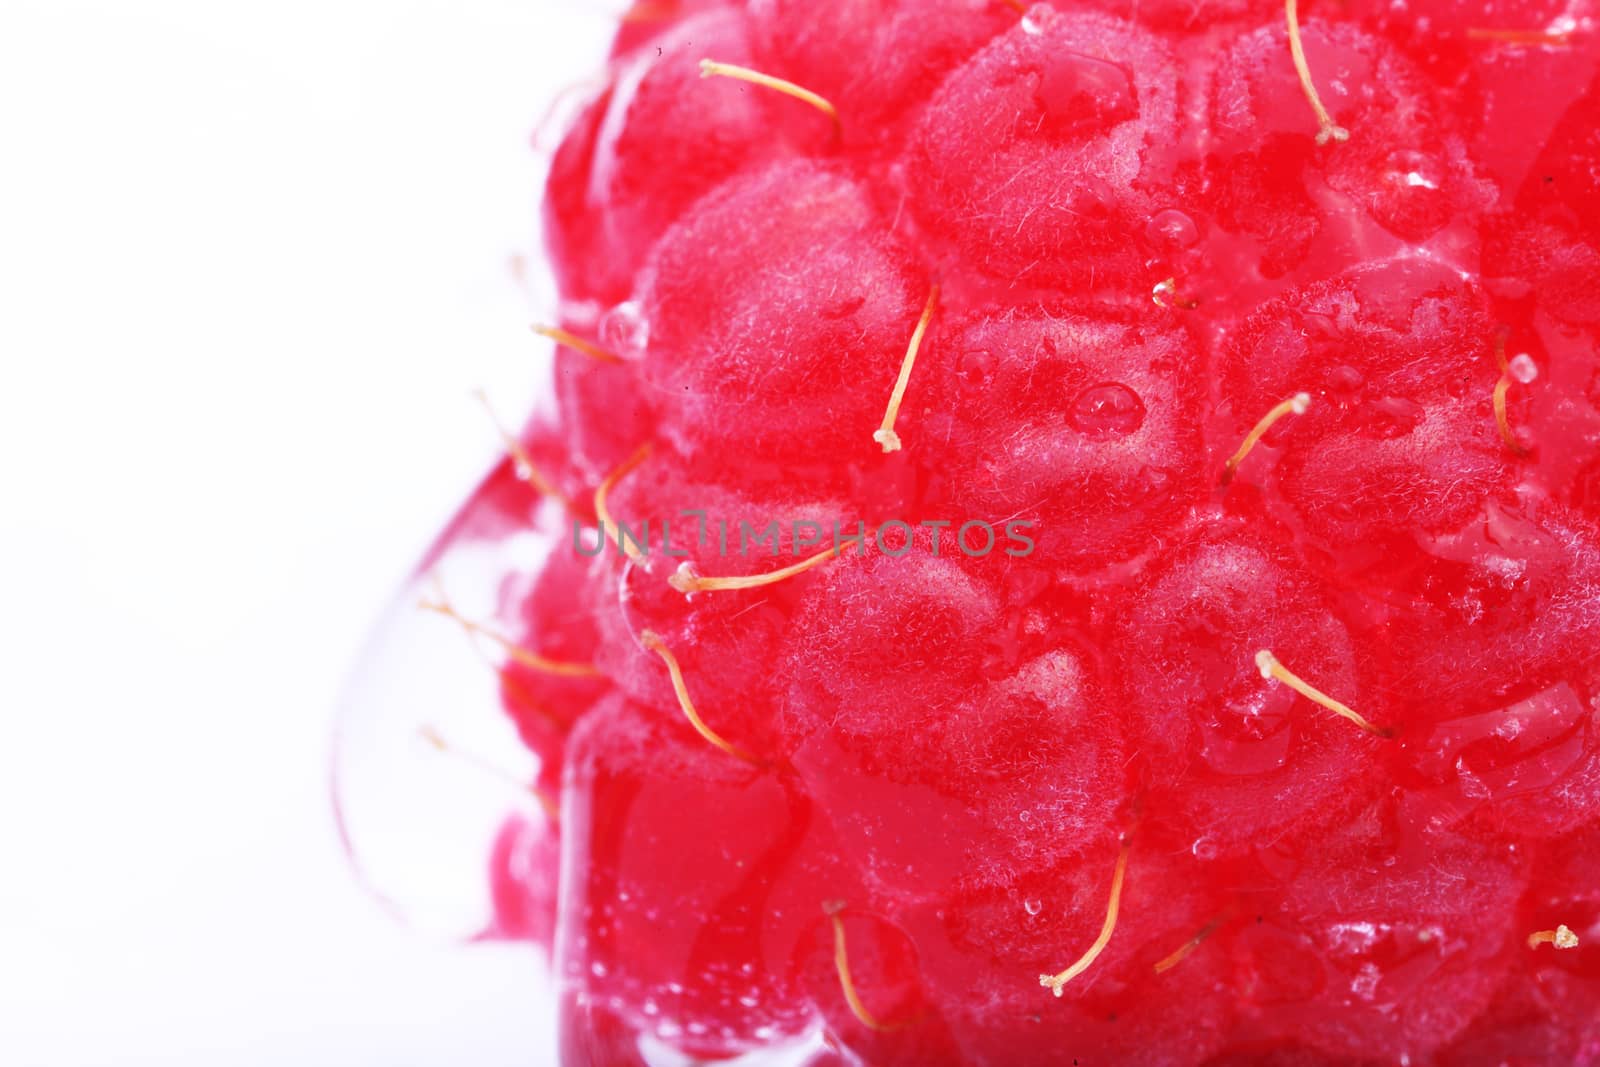  Macro view of a raspberry by gorov108